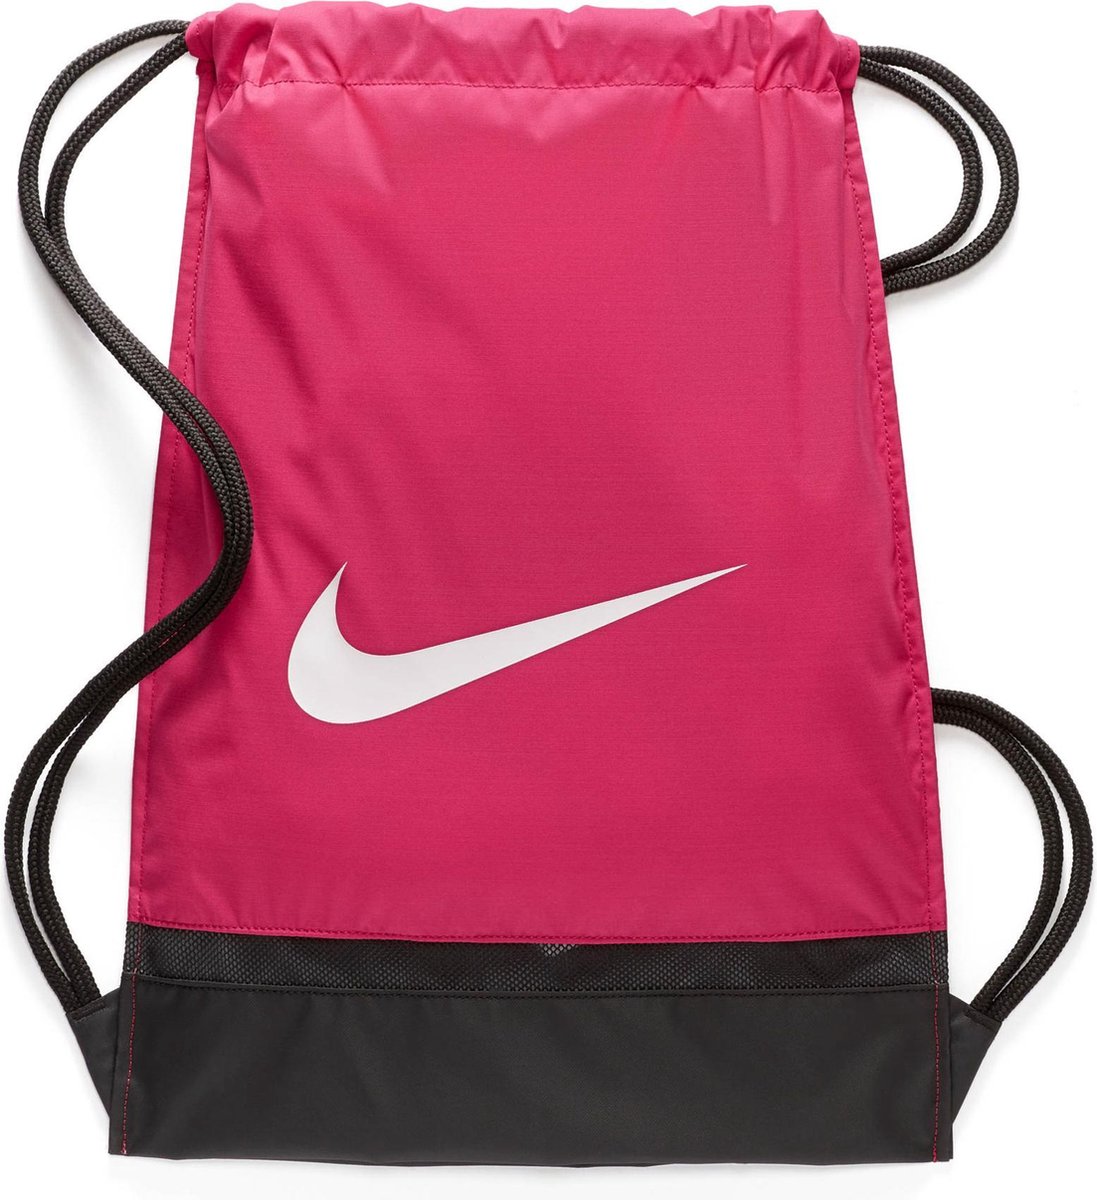 Nike SporttasKinderen en volwassenen - roze - Nike